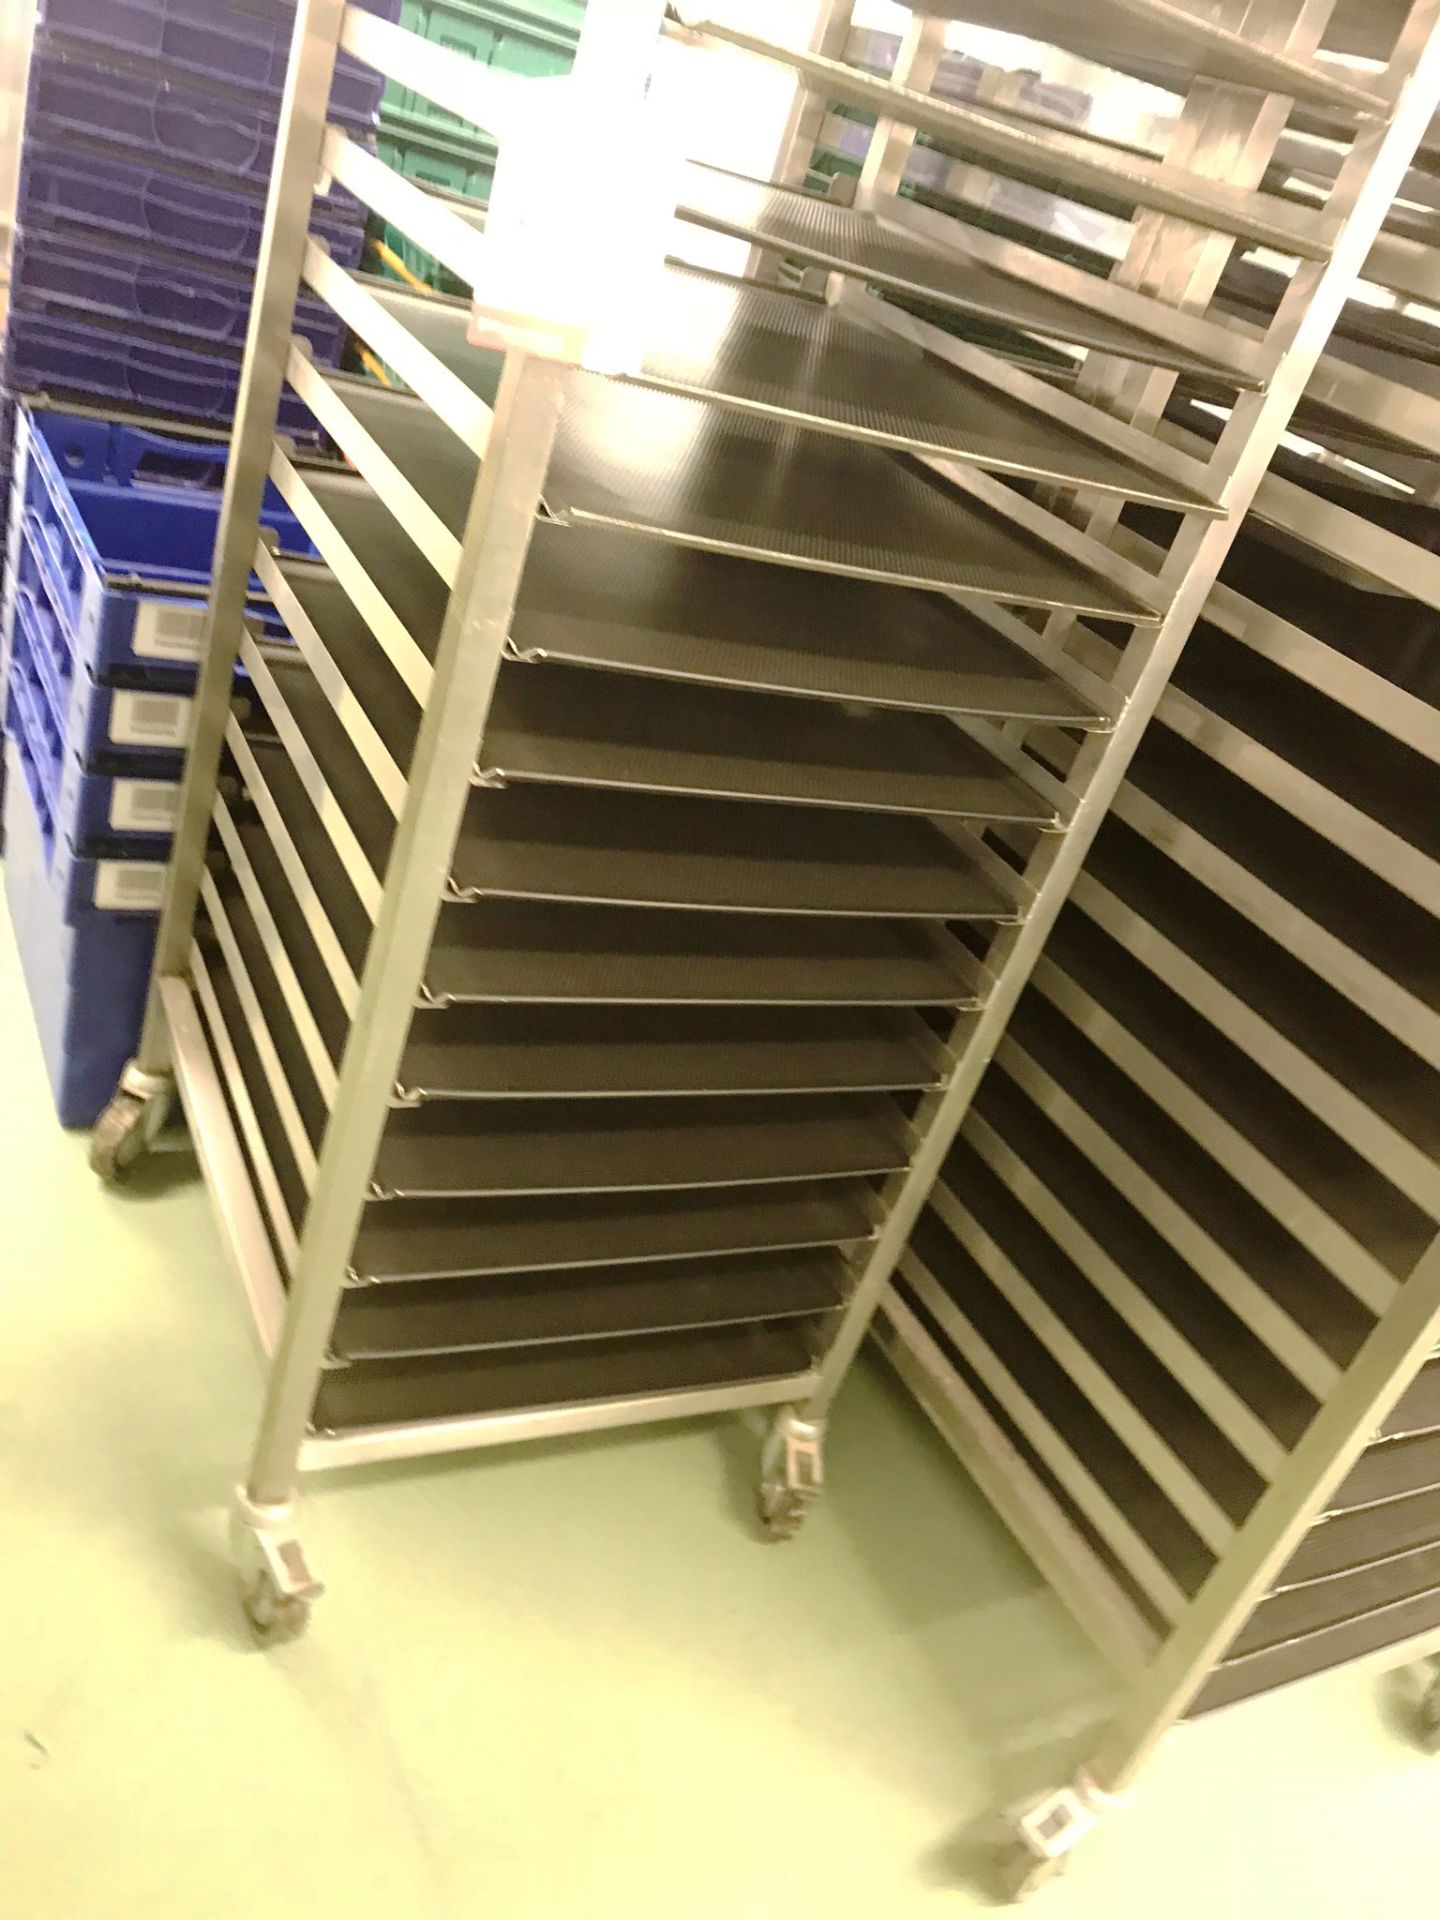 5 x 16 Tier Mobile Metal Cooling Racks w/ Trays - Image 4 of 4